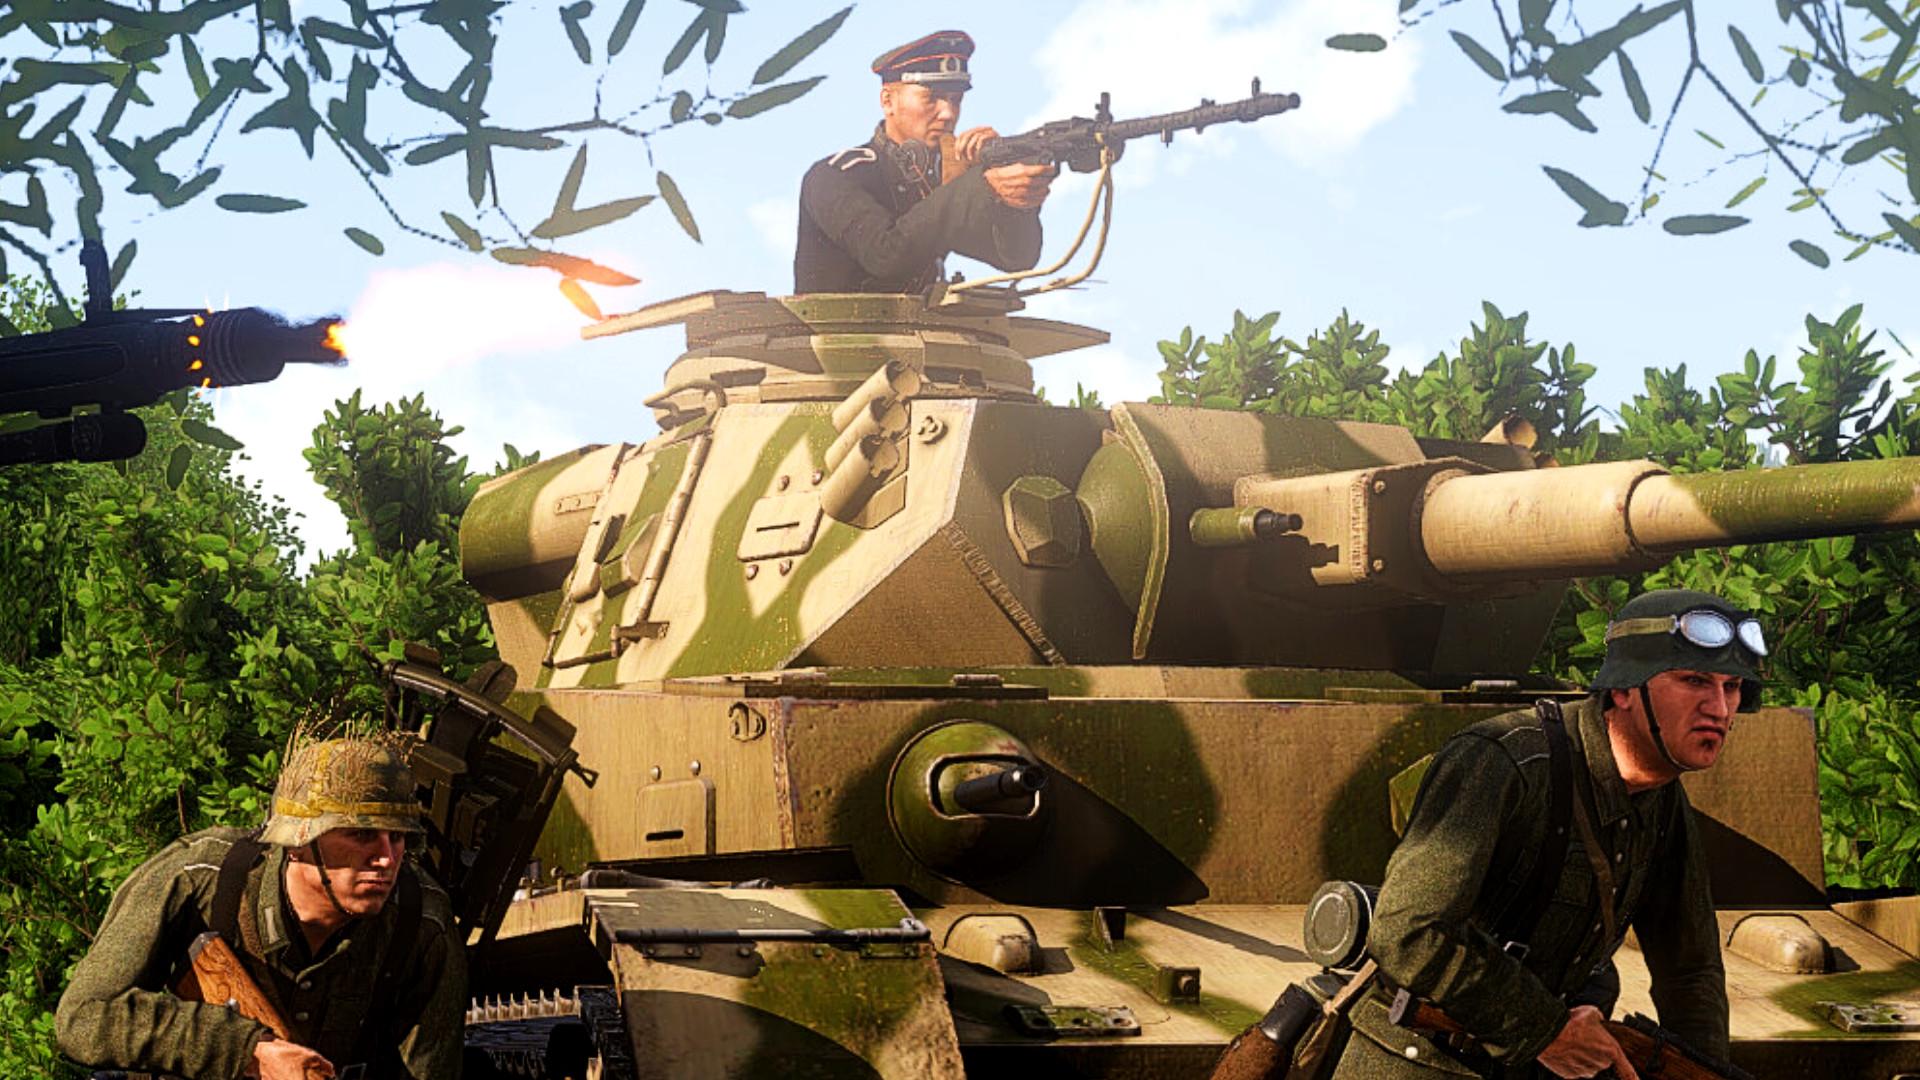 The Latest Arma 3 DLC Introduces Unprecedented WW2 Cooperative Campaign Experience